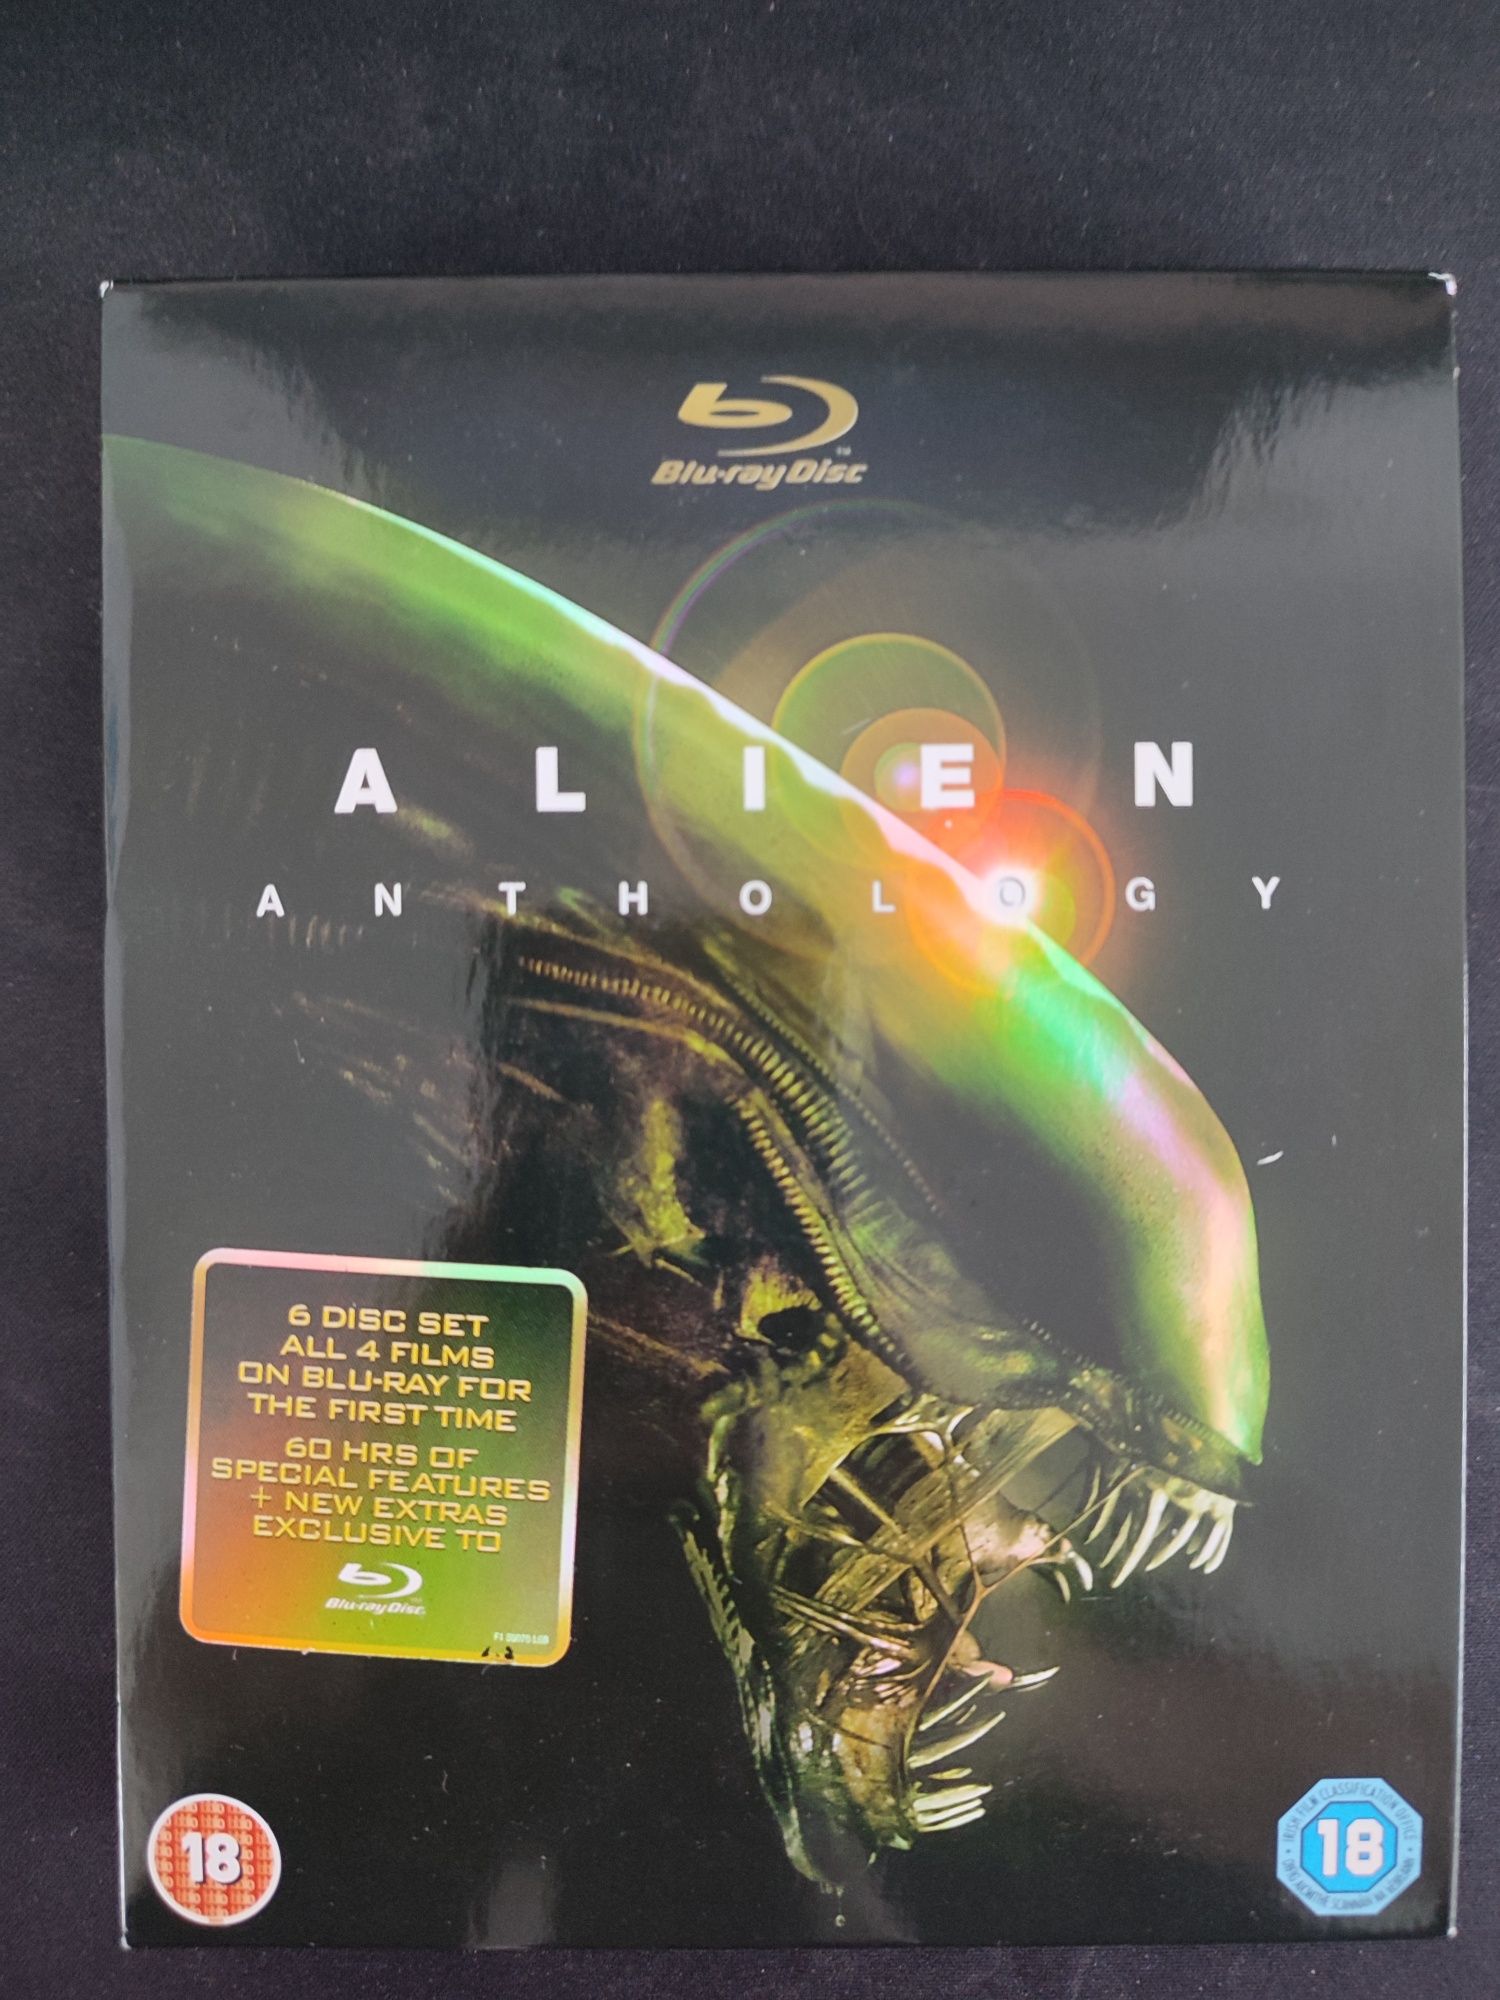 Alien Anthology Blu Ray 6 disc